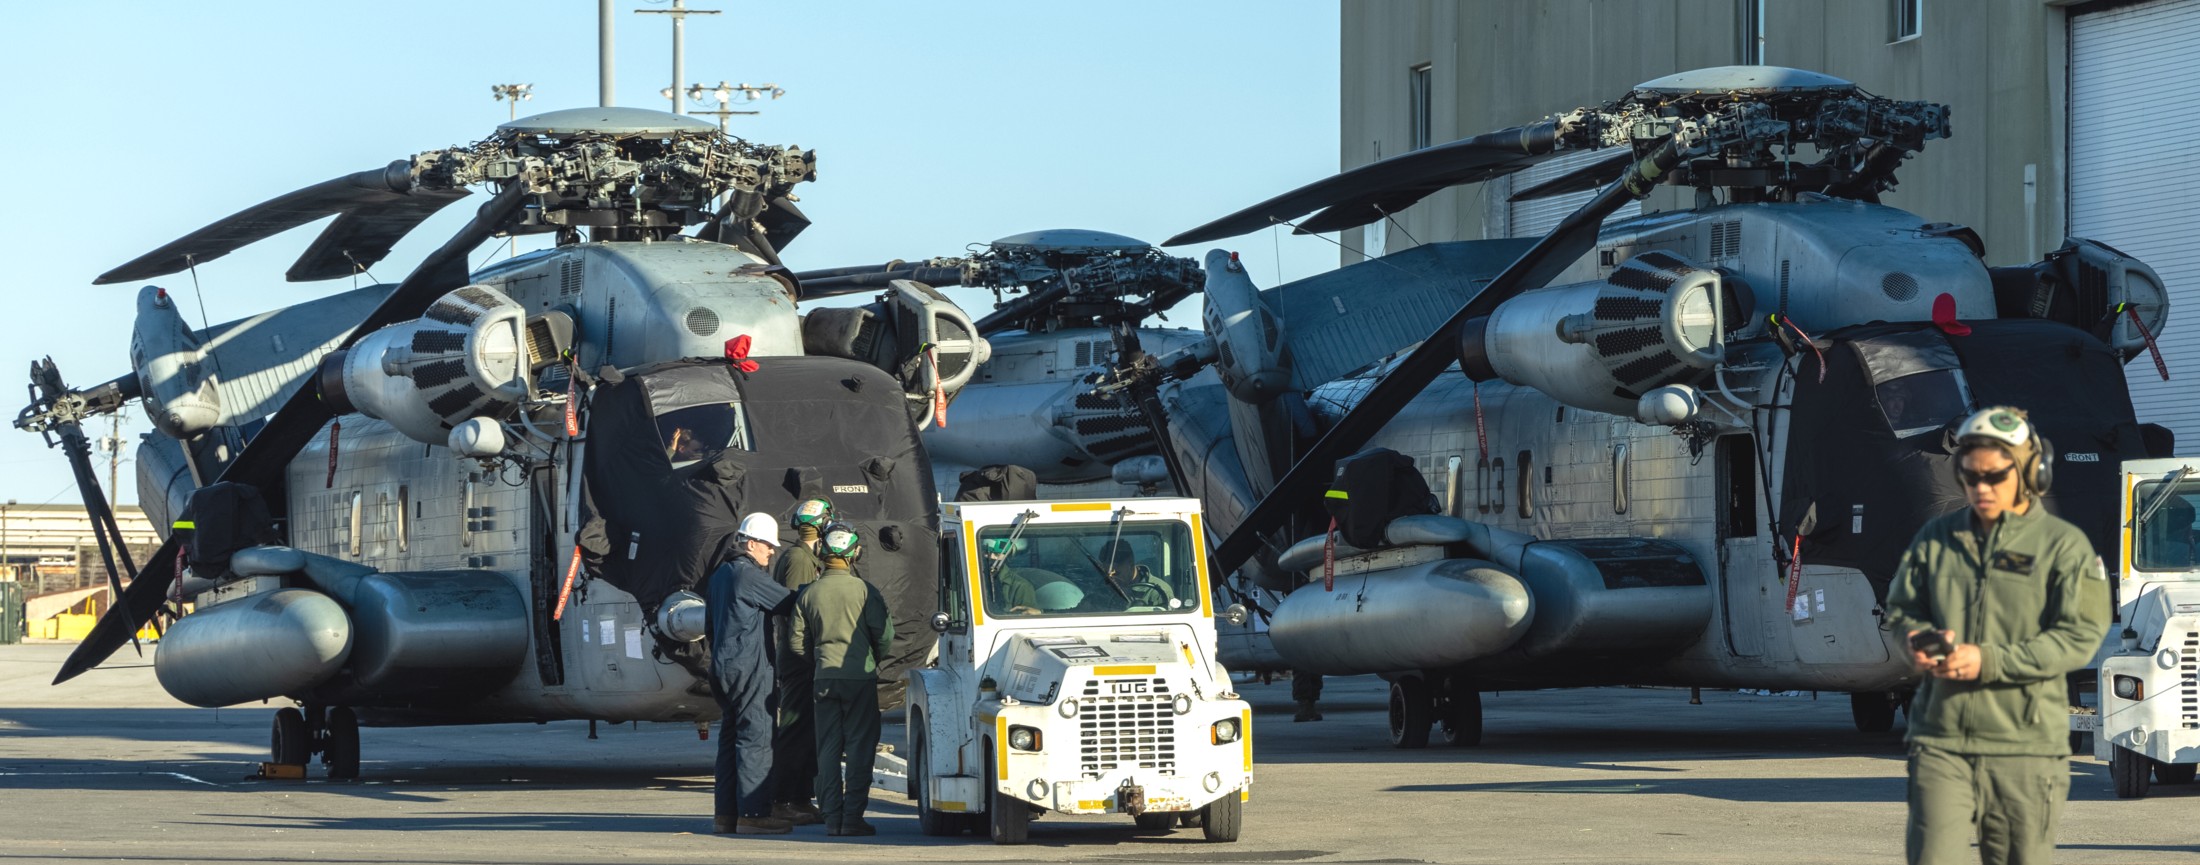 hmh-366 hammerheads ch-53e super stallion marine heavy helicopter squadron morehead city north carolina ship load 154